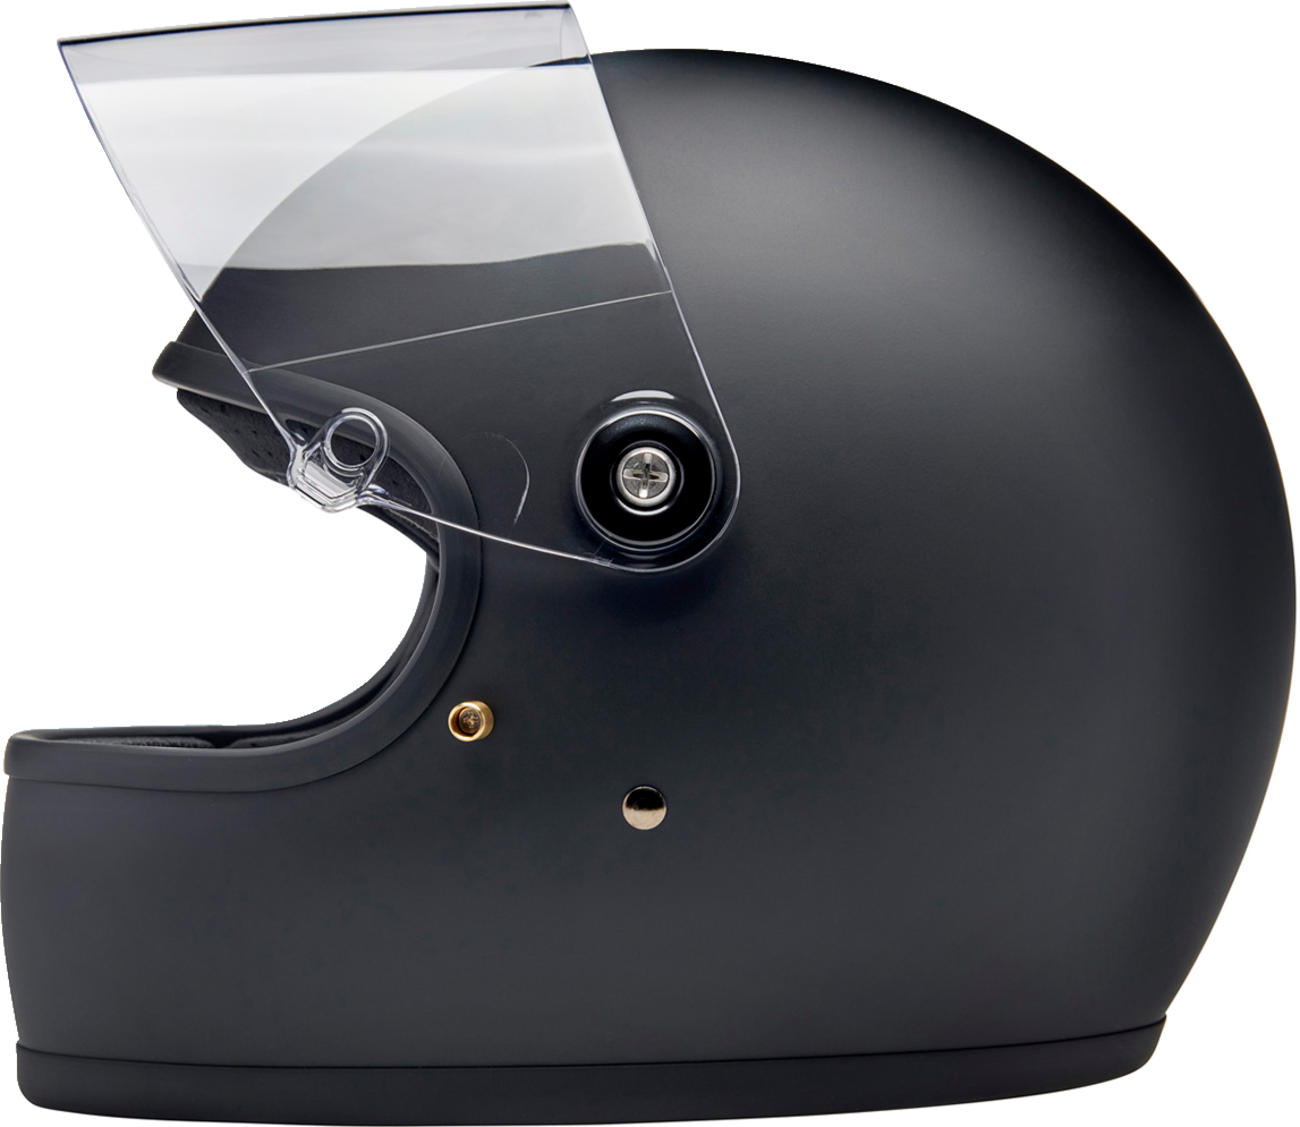 BILTWELL Gringo S Helmet - Flat Black - 2XL 1003-201-506